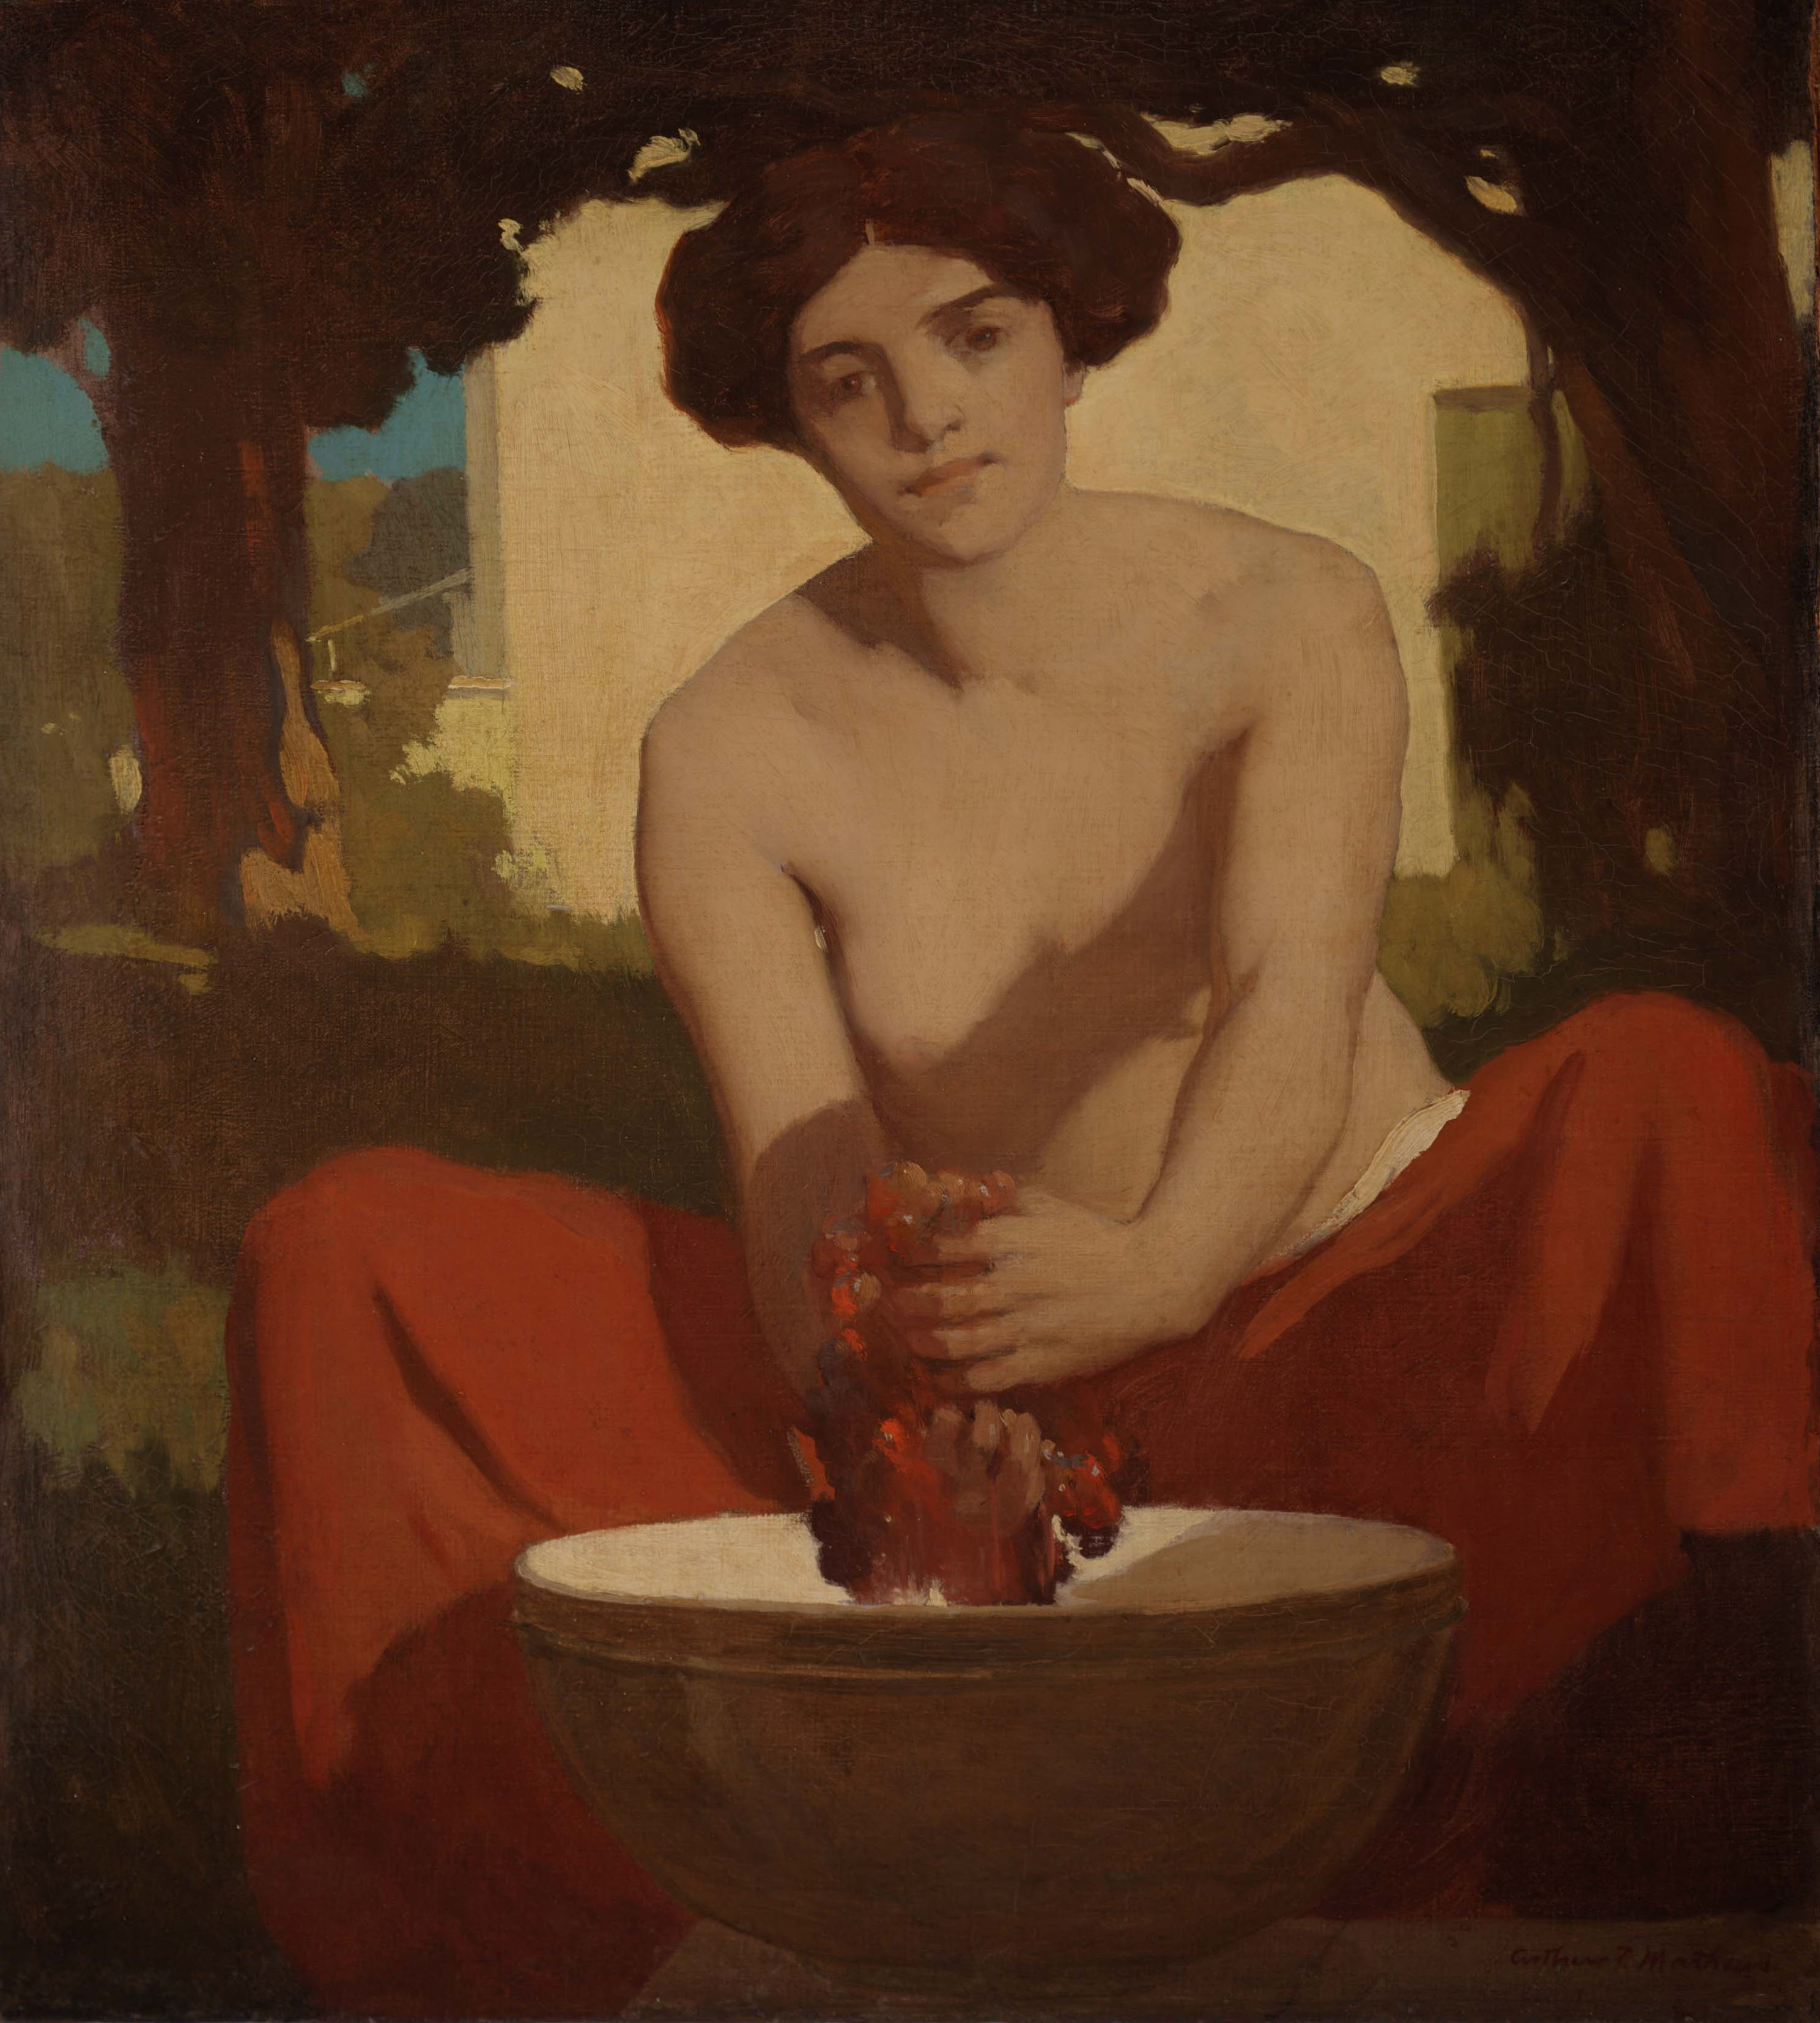 The Grape (The Wine Maker) by Arthur Frank Mathews